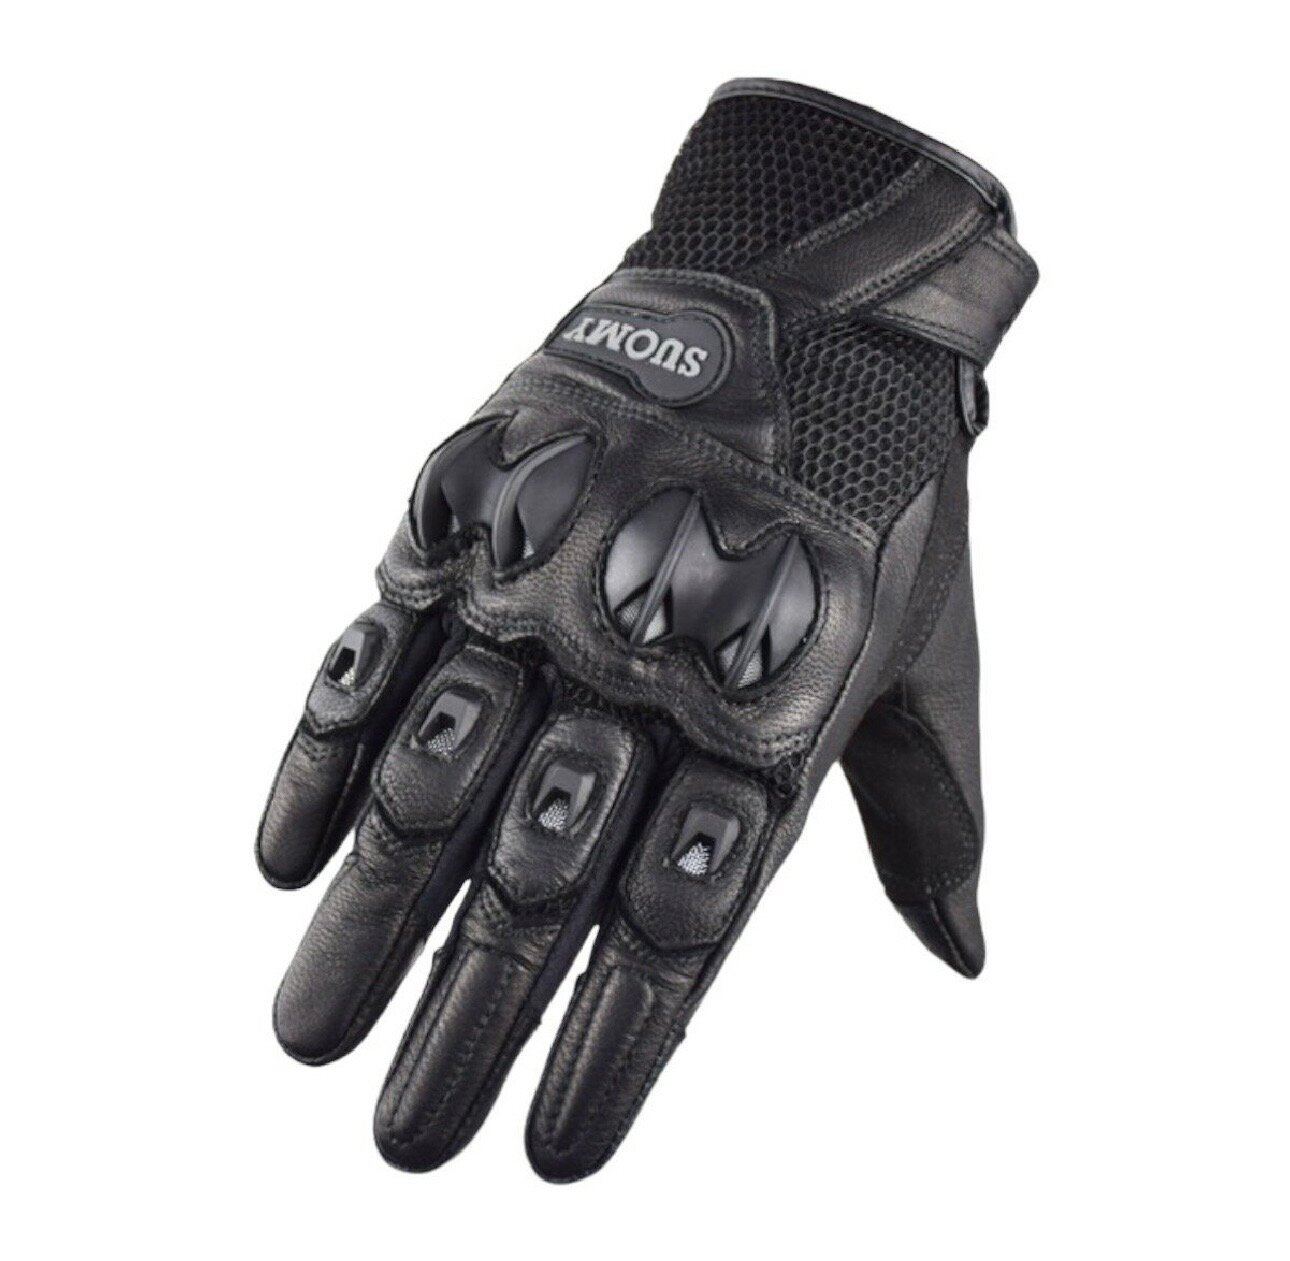 Мотоперчатки перчатки кожаные Suomy SU-15 для мотоциклиста на мотоцикл скутер мопед квадроцикл, черные, XL